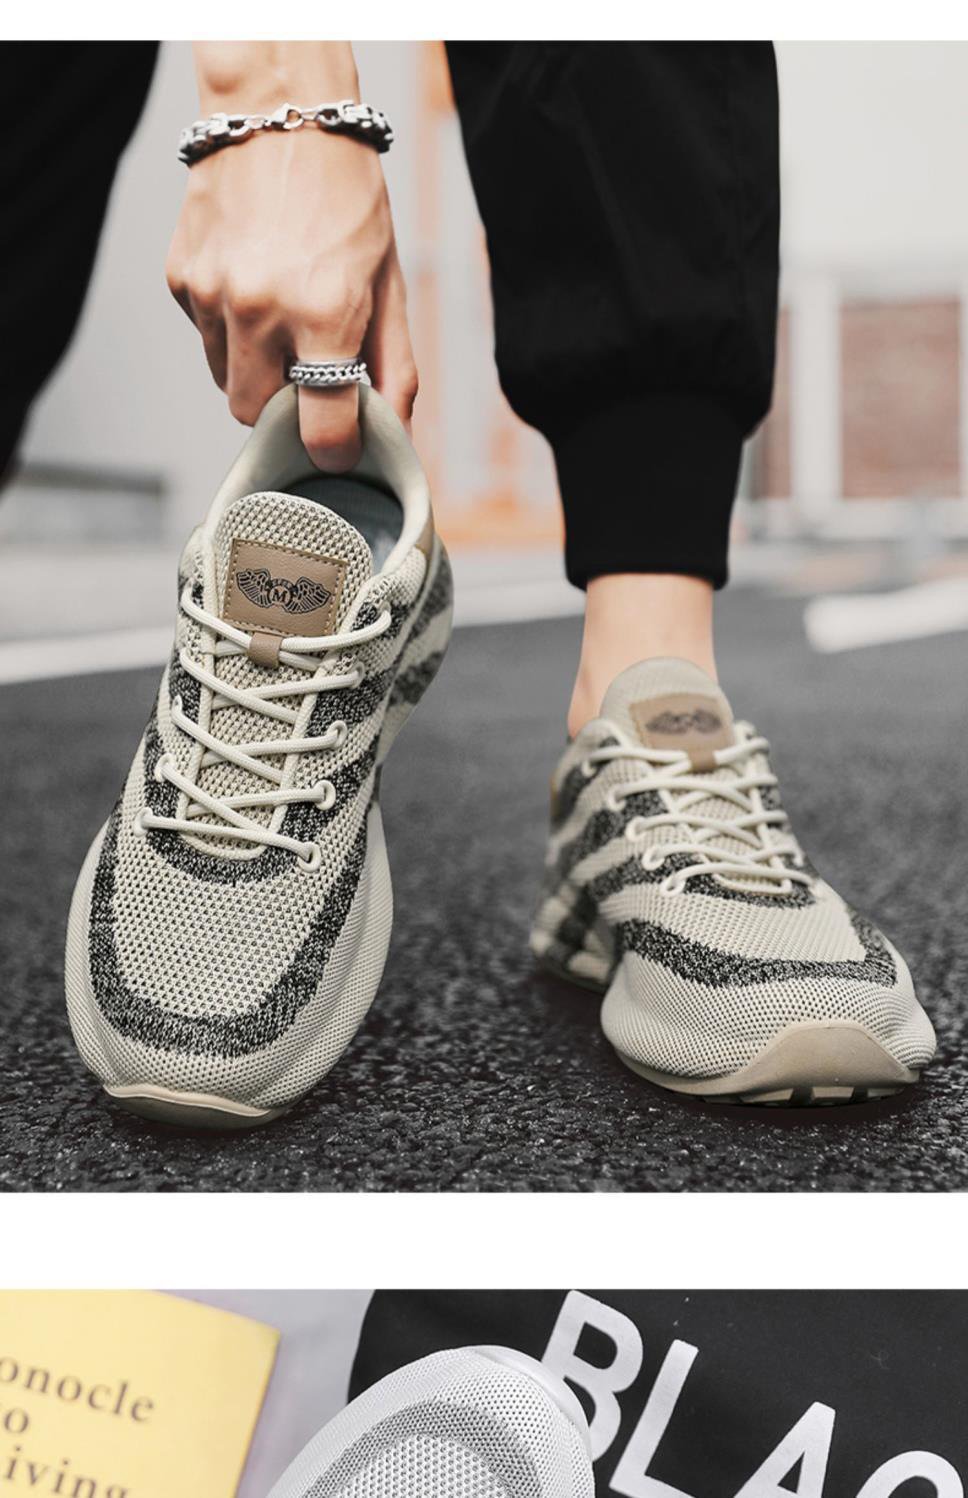 Zebra-print mesh sports flyknit running shoes